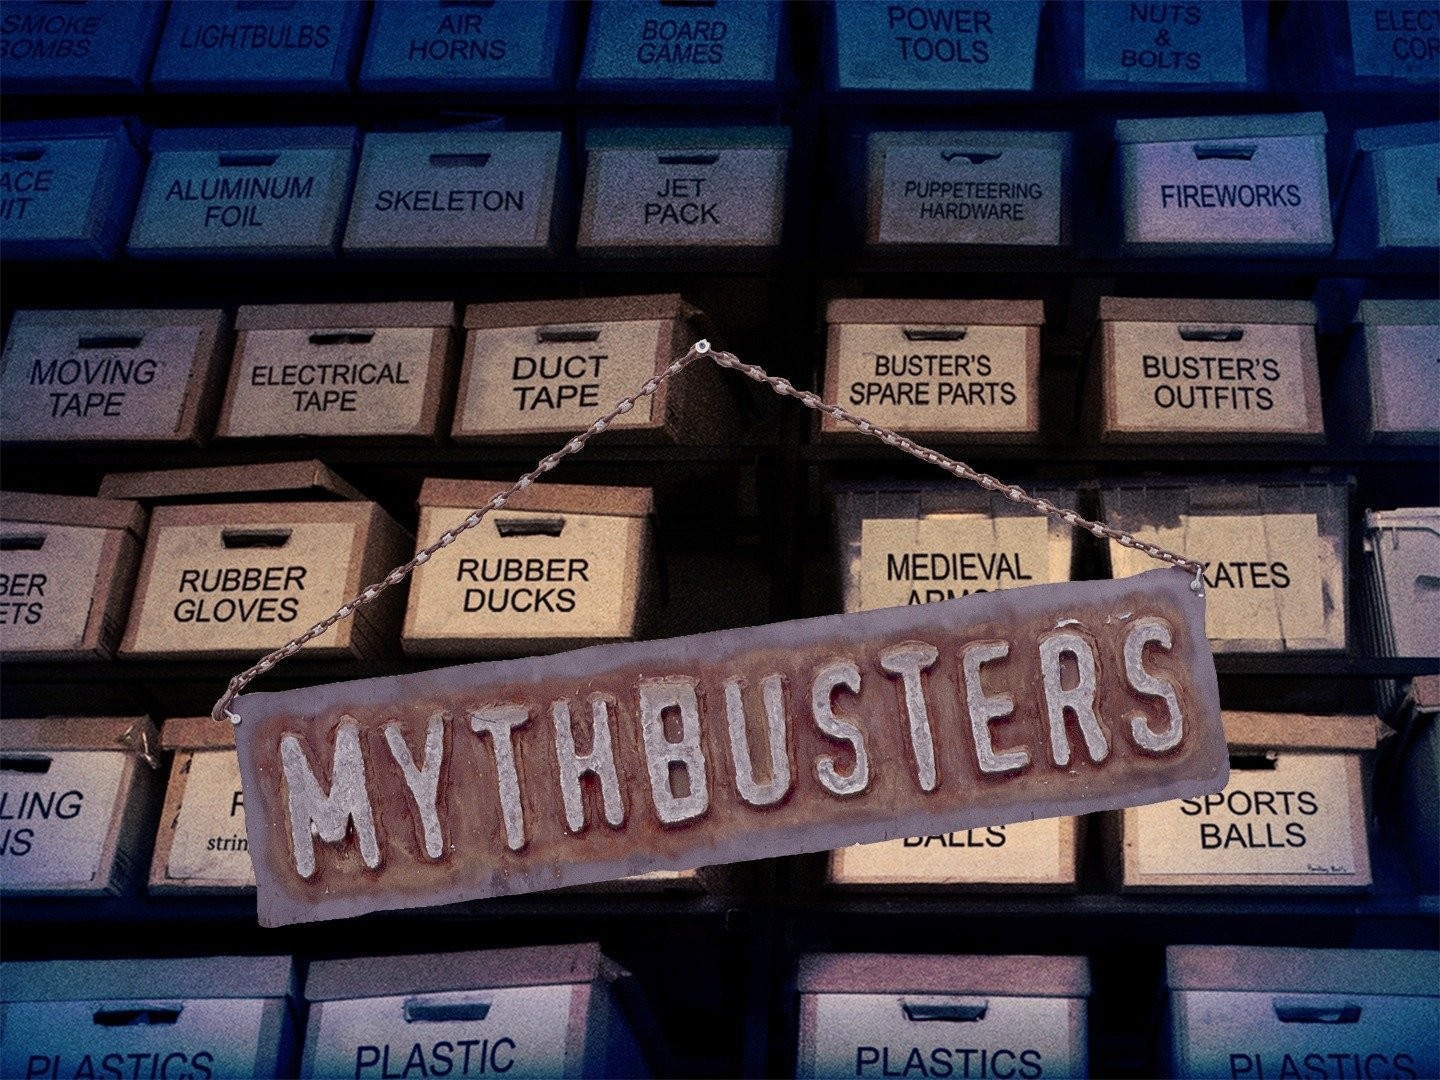 MythBusters: Season 14, Episode 5 - Rotten Tomatoes